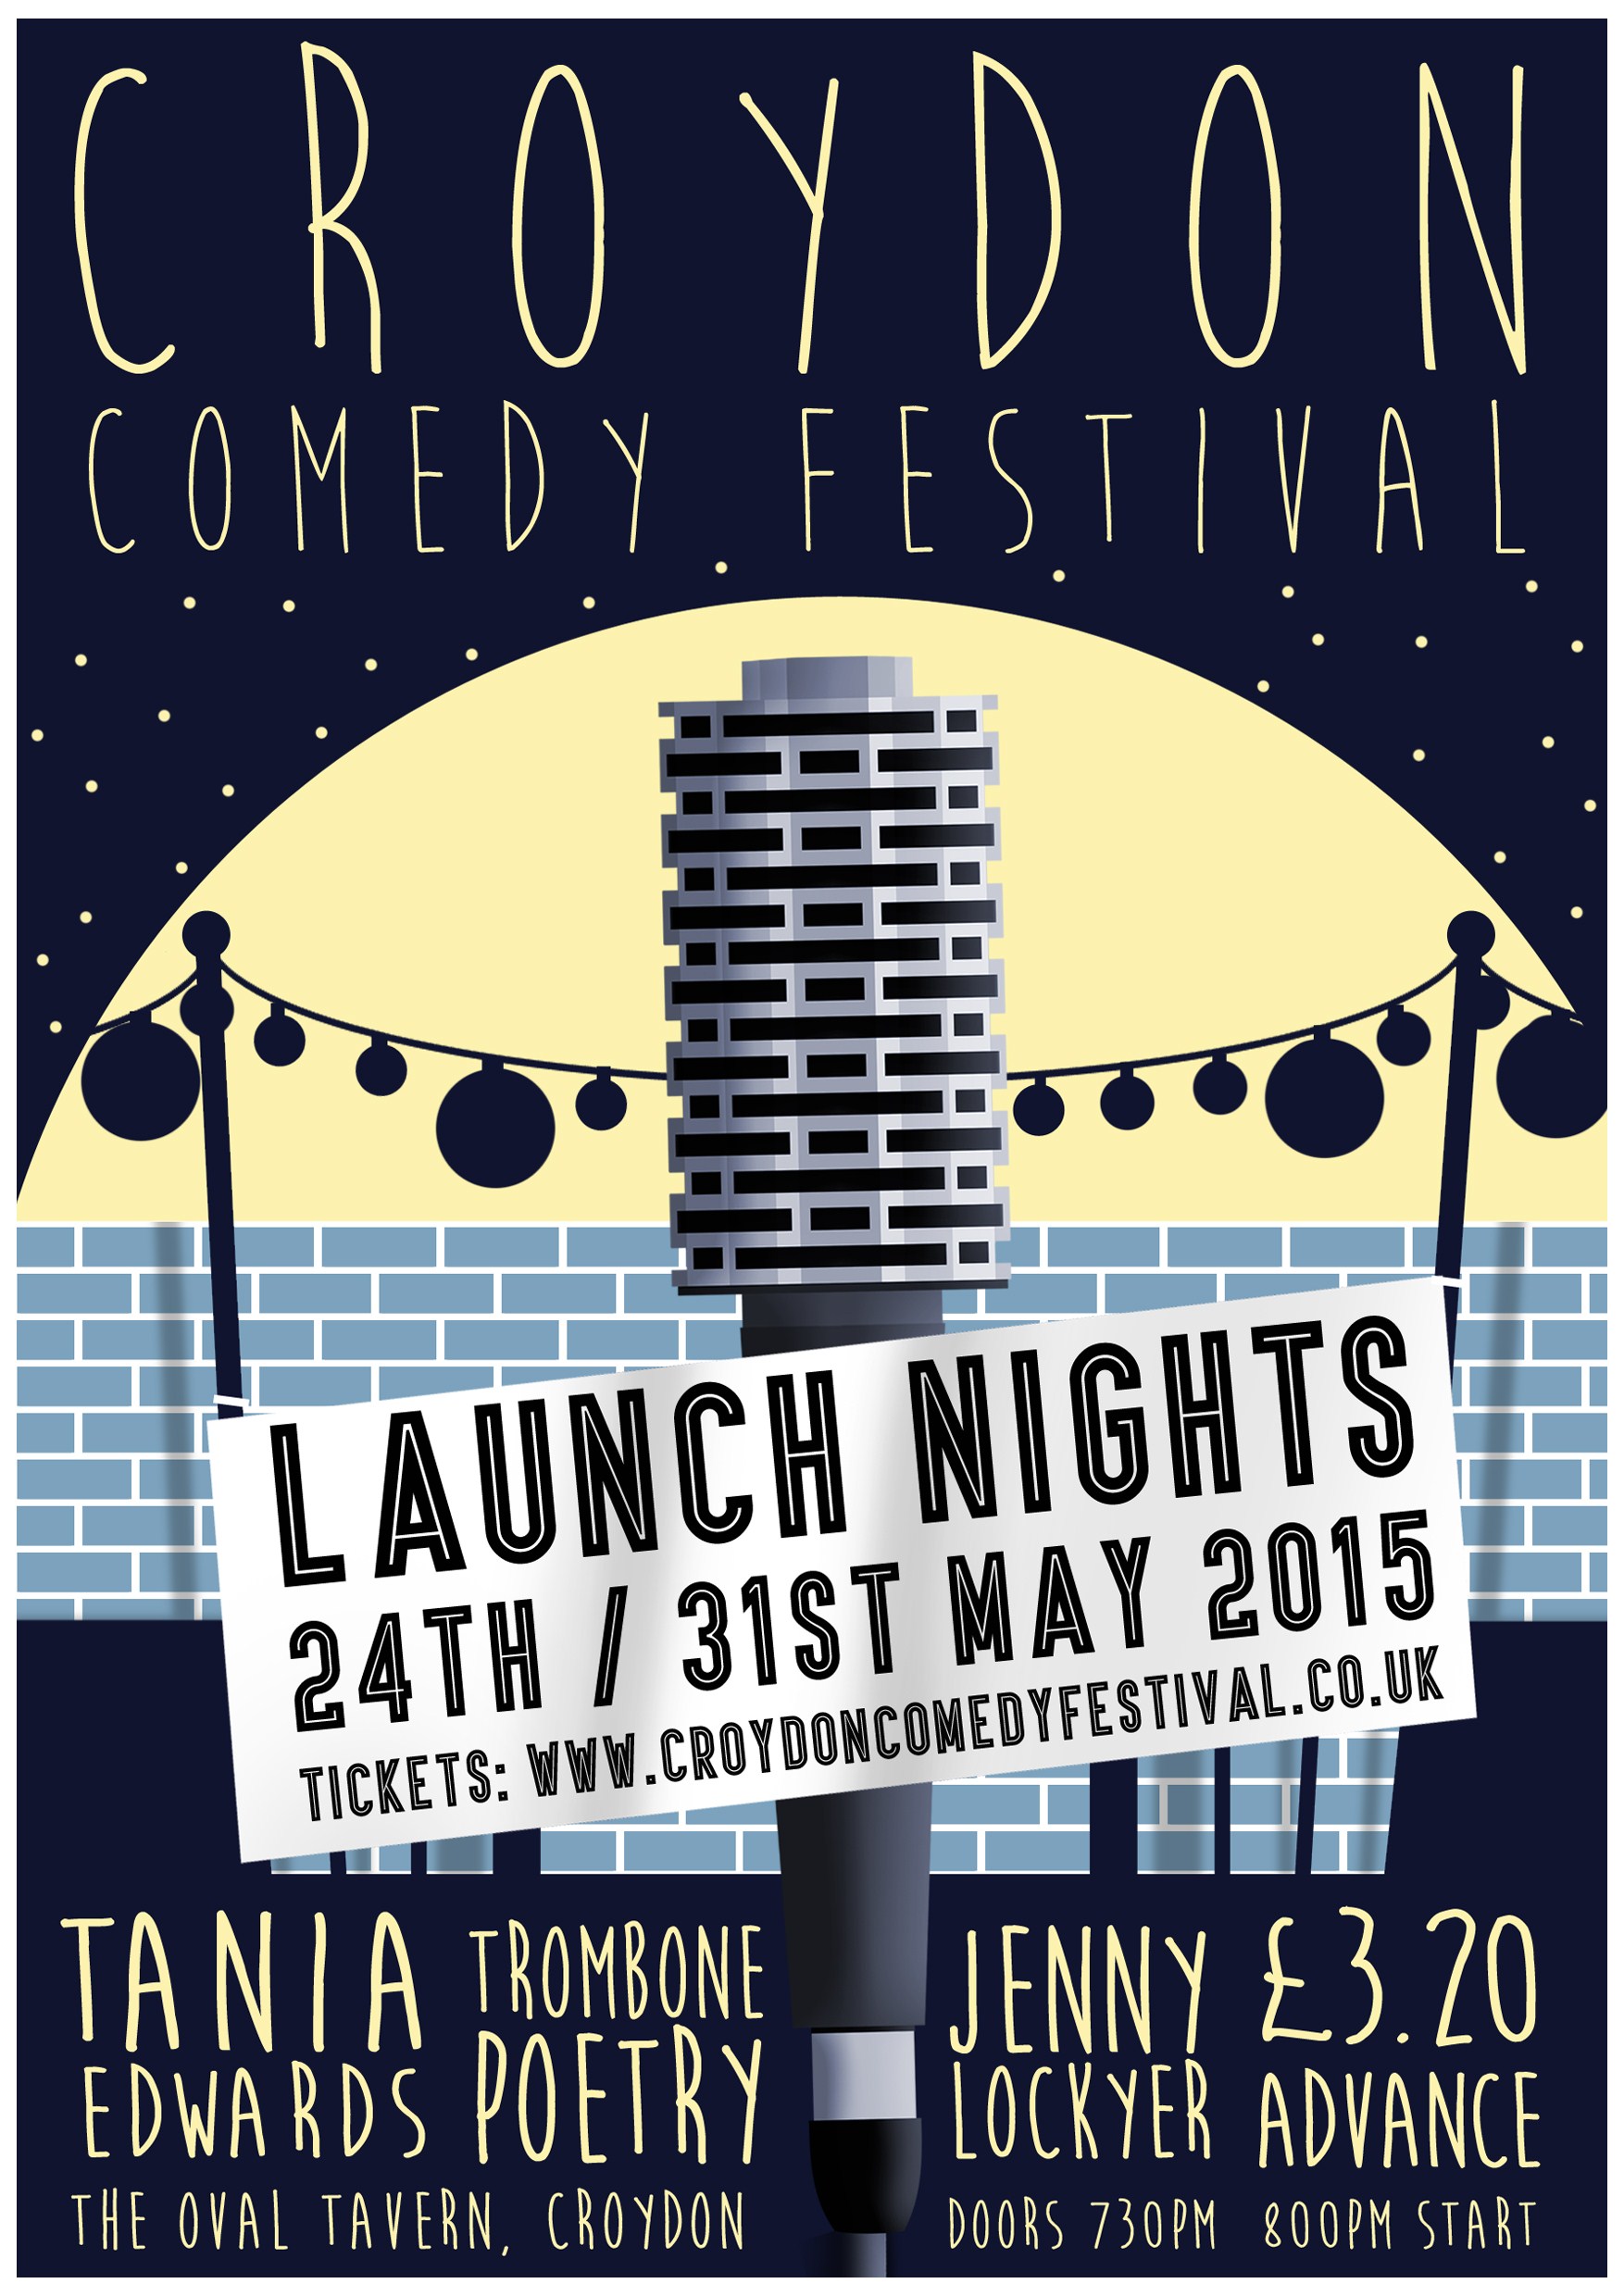 Croydon Comedy Festival launch event: Tania Edwards + Trombone Poetry + Jenny Lockyer